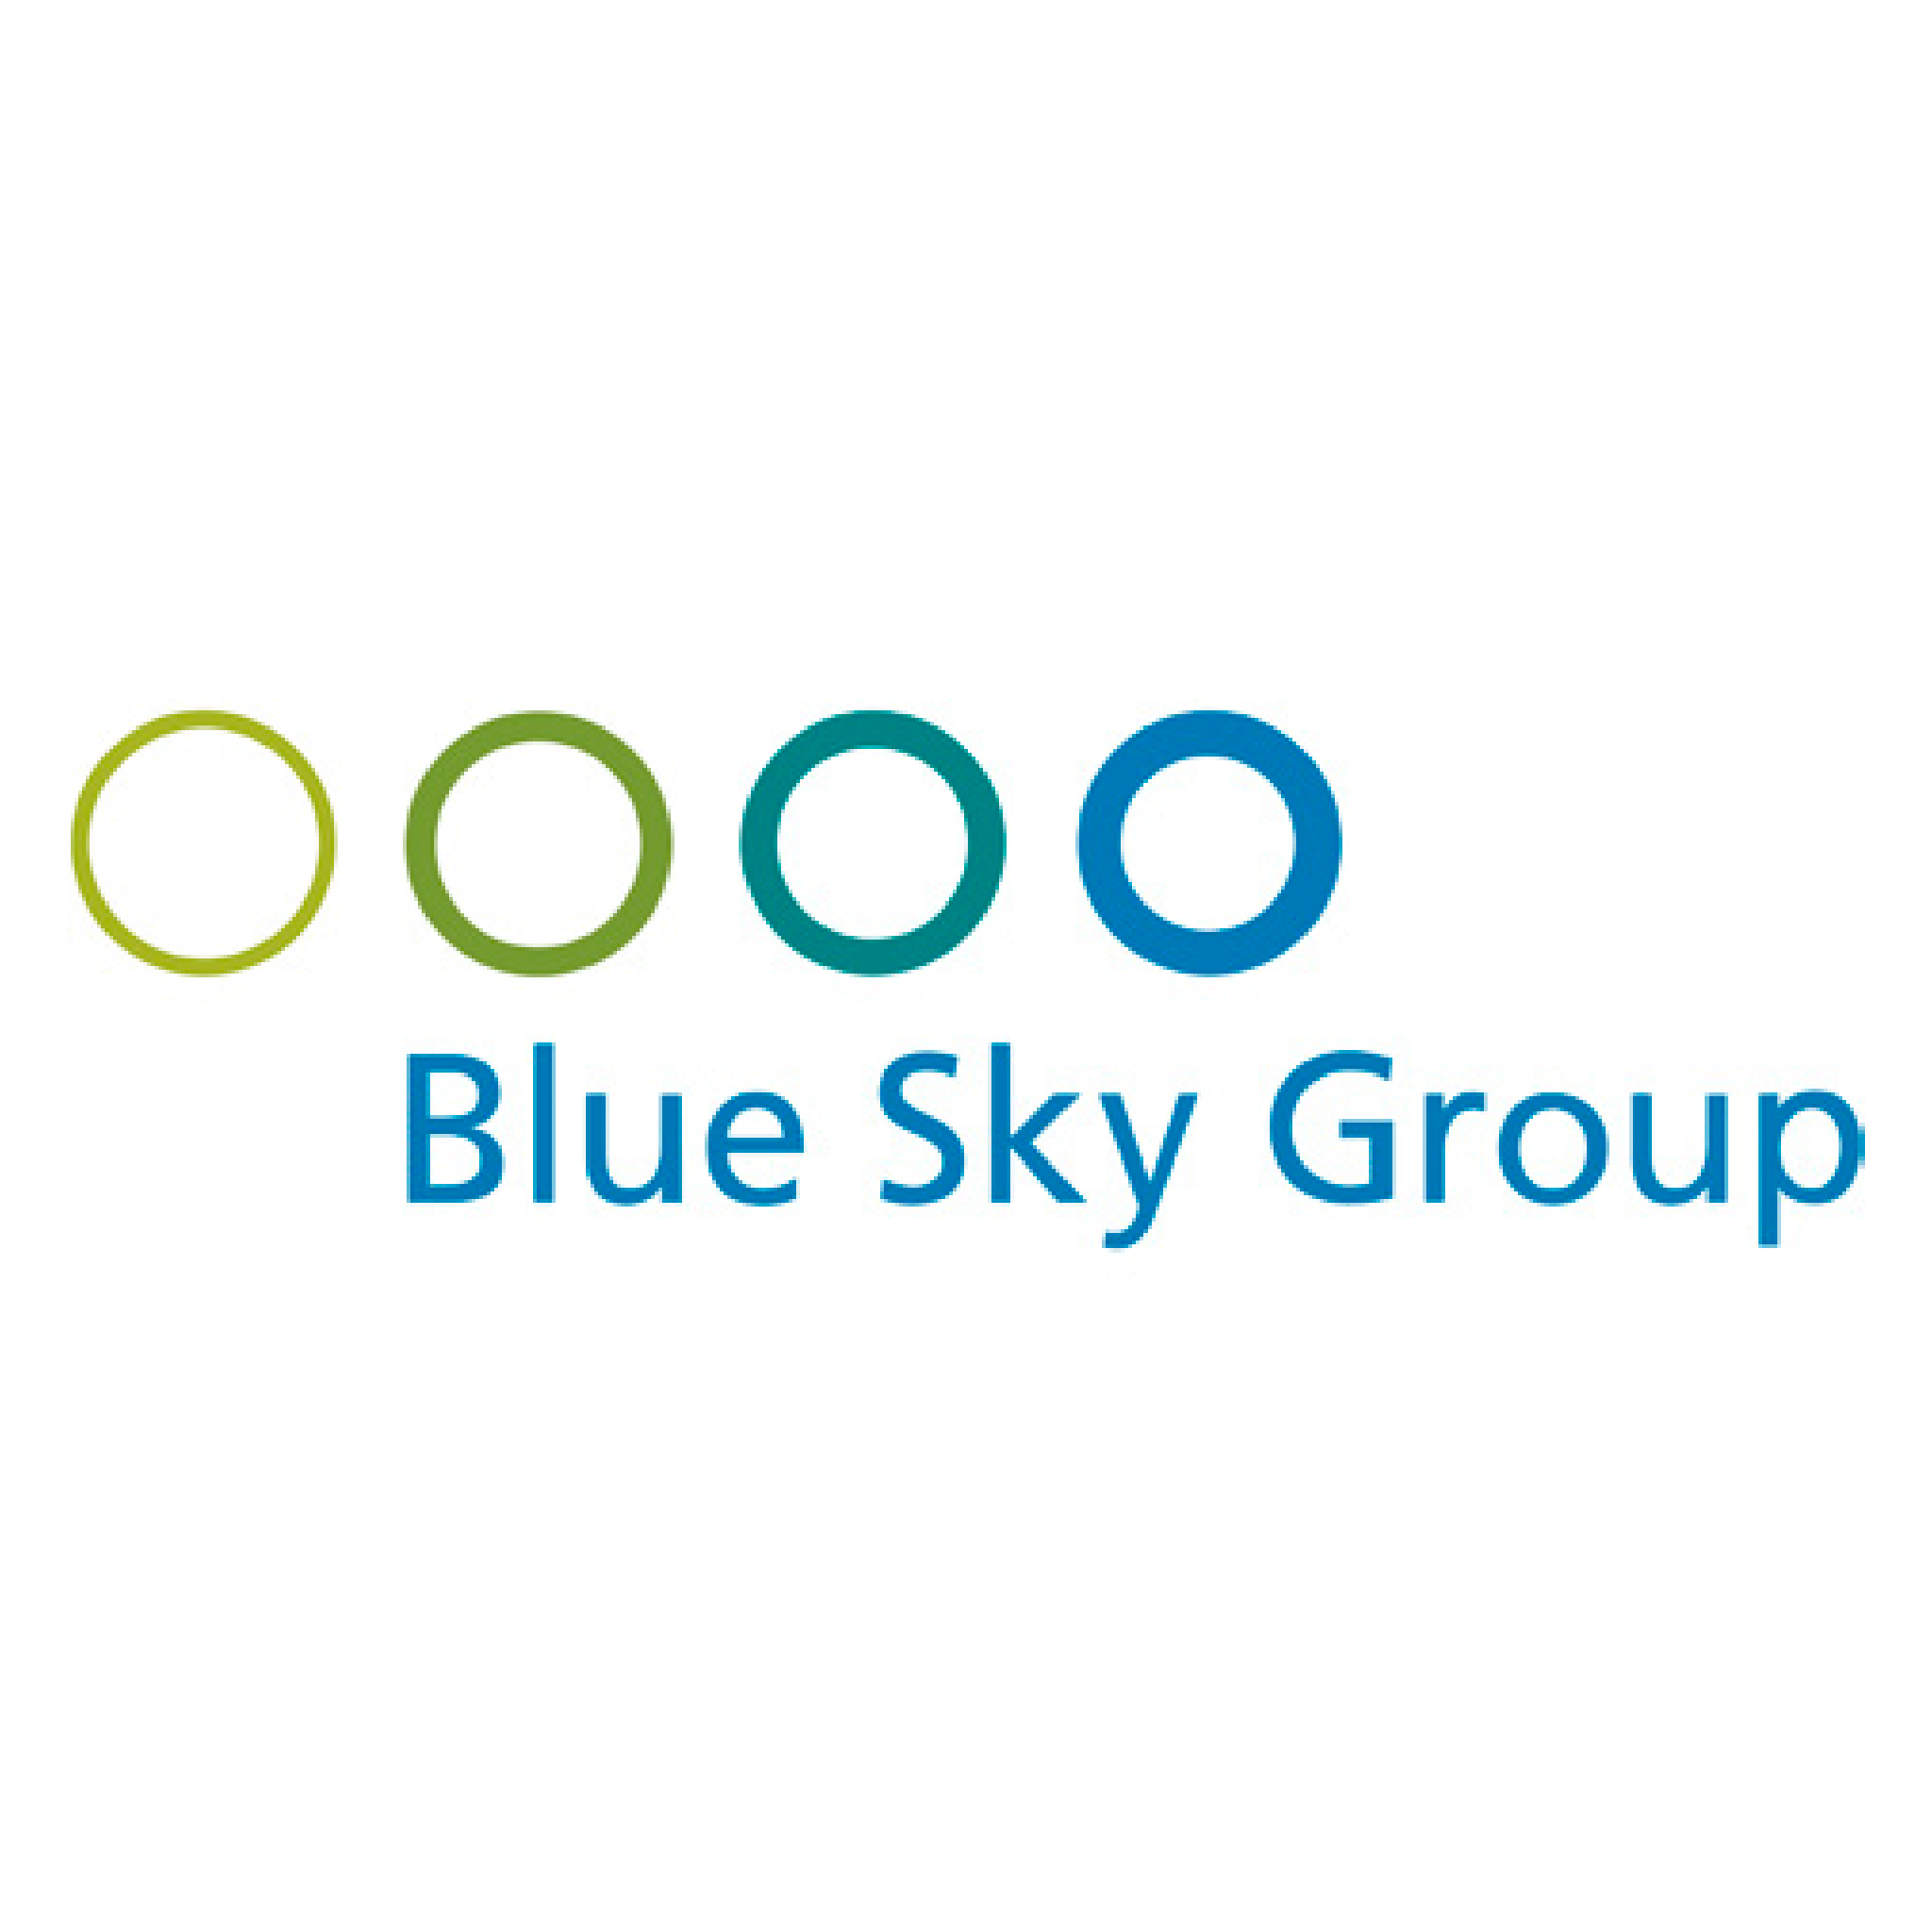 KLM Blue Sky Group